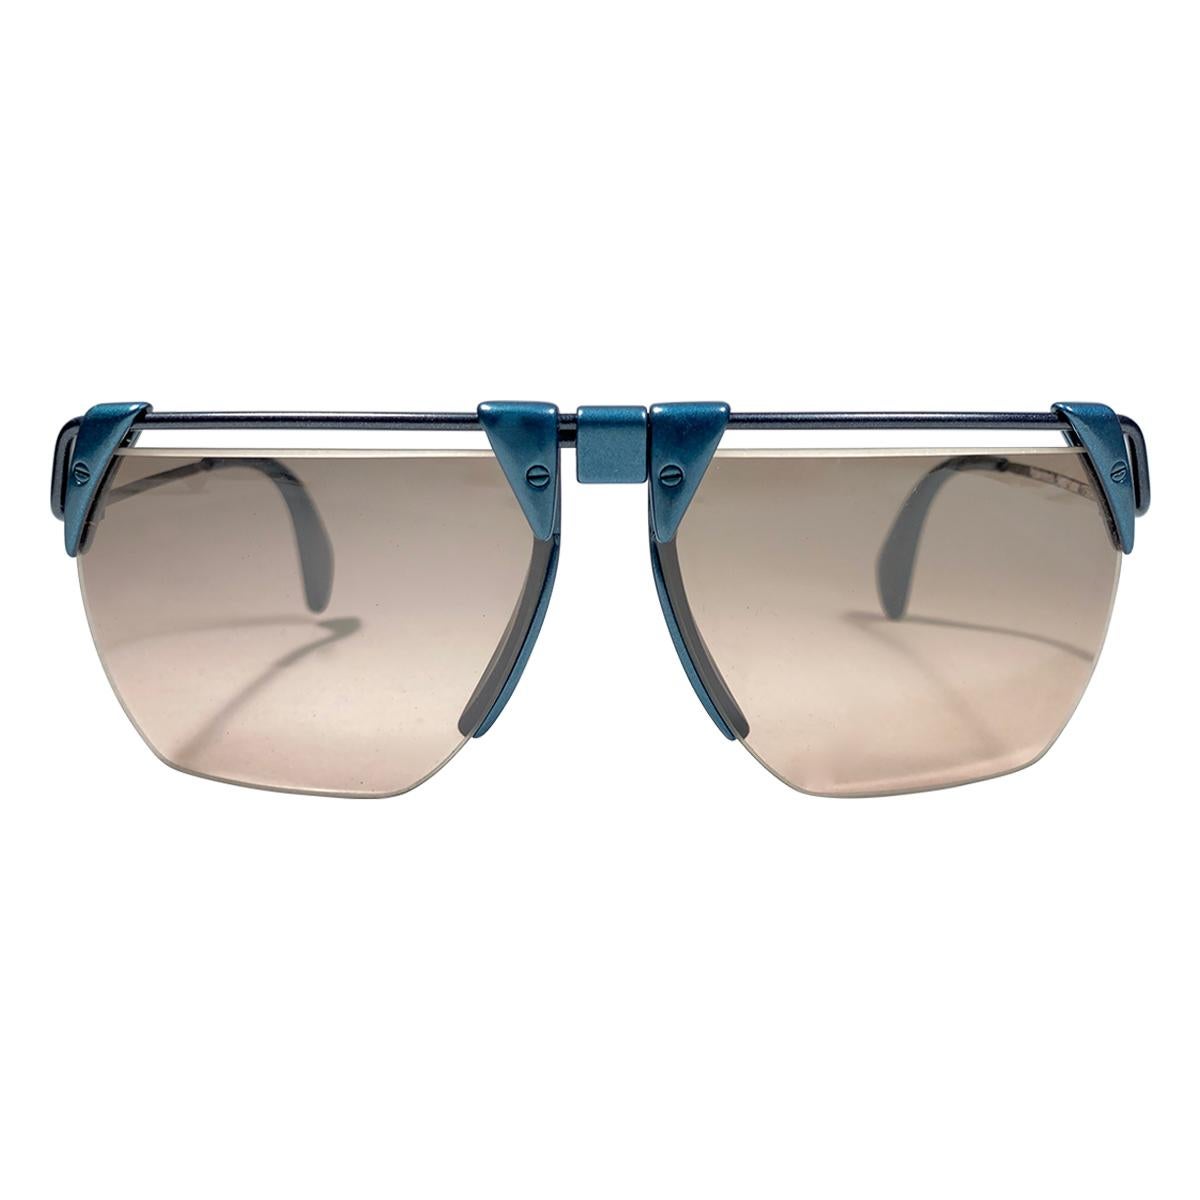 New Vintage Rodenstock 1758 Metallic Blue Futuristic 1980's Sunglasses